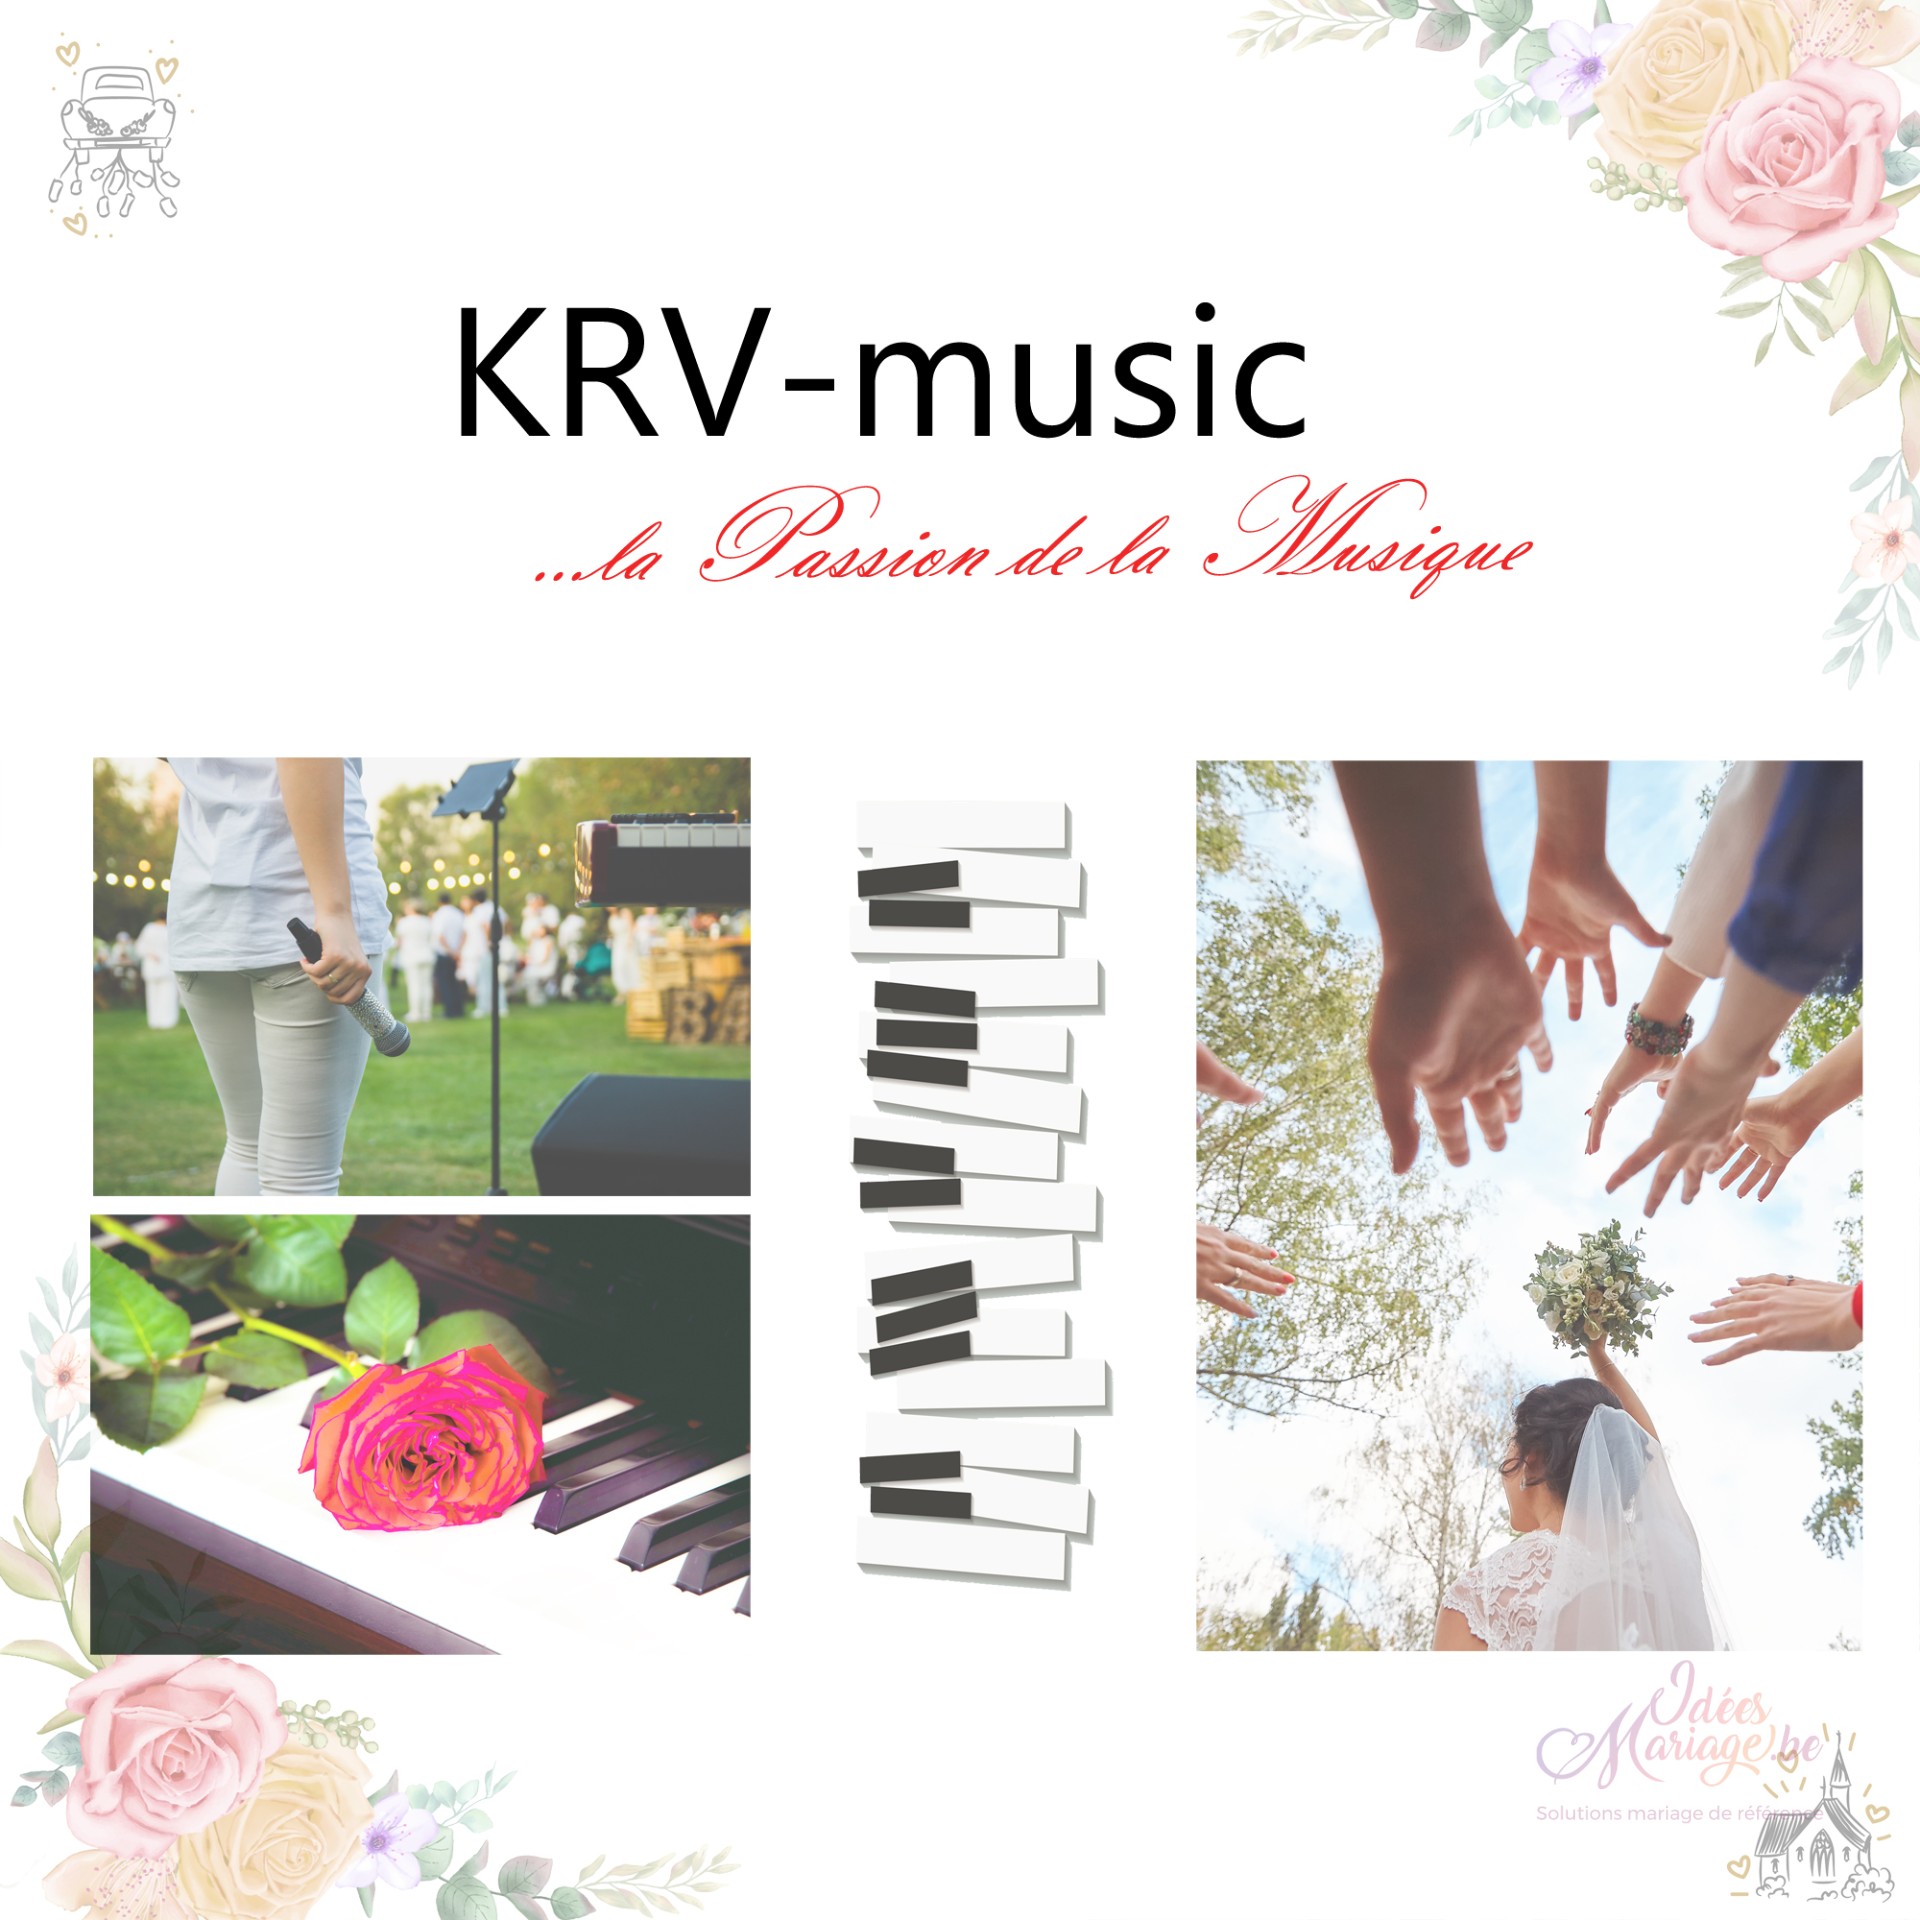 KRV-music